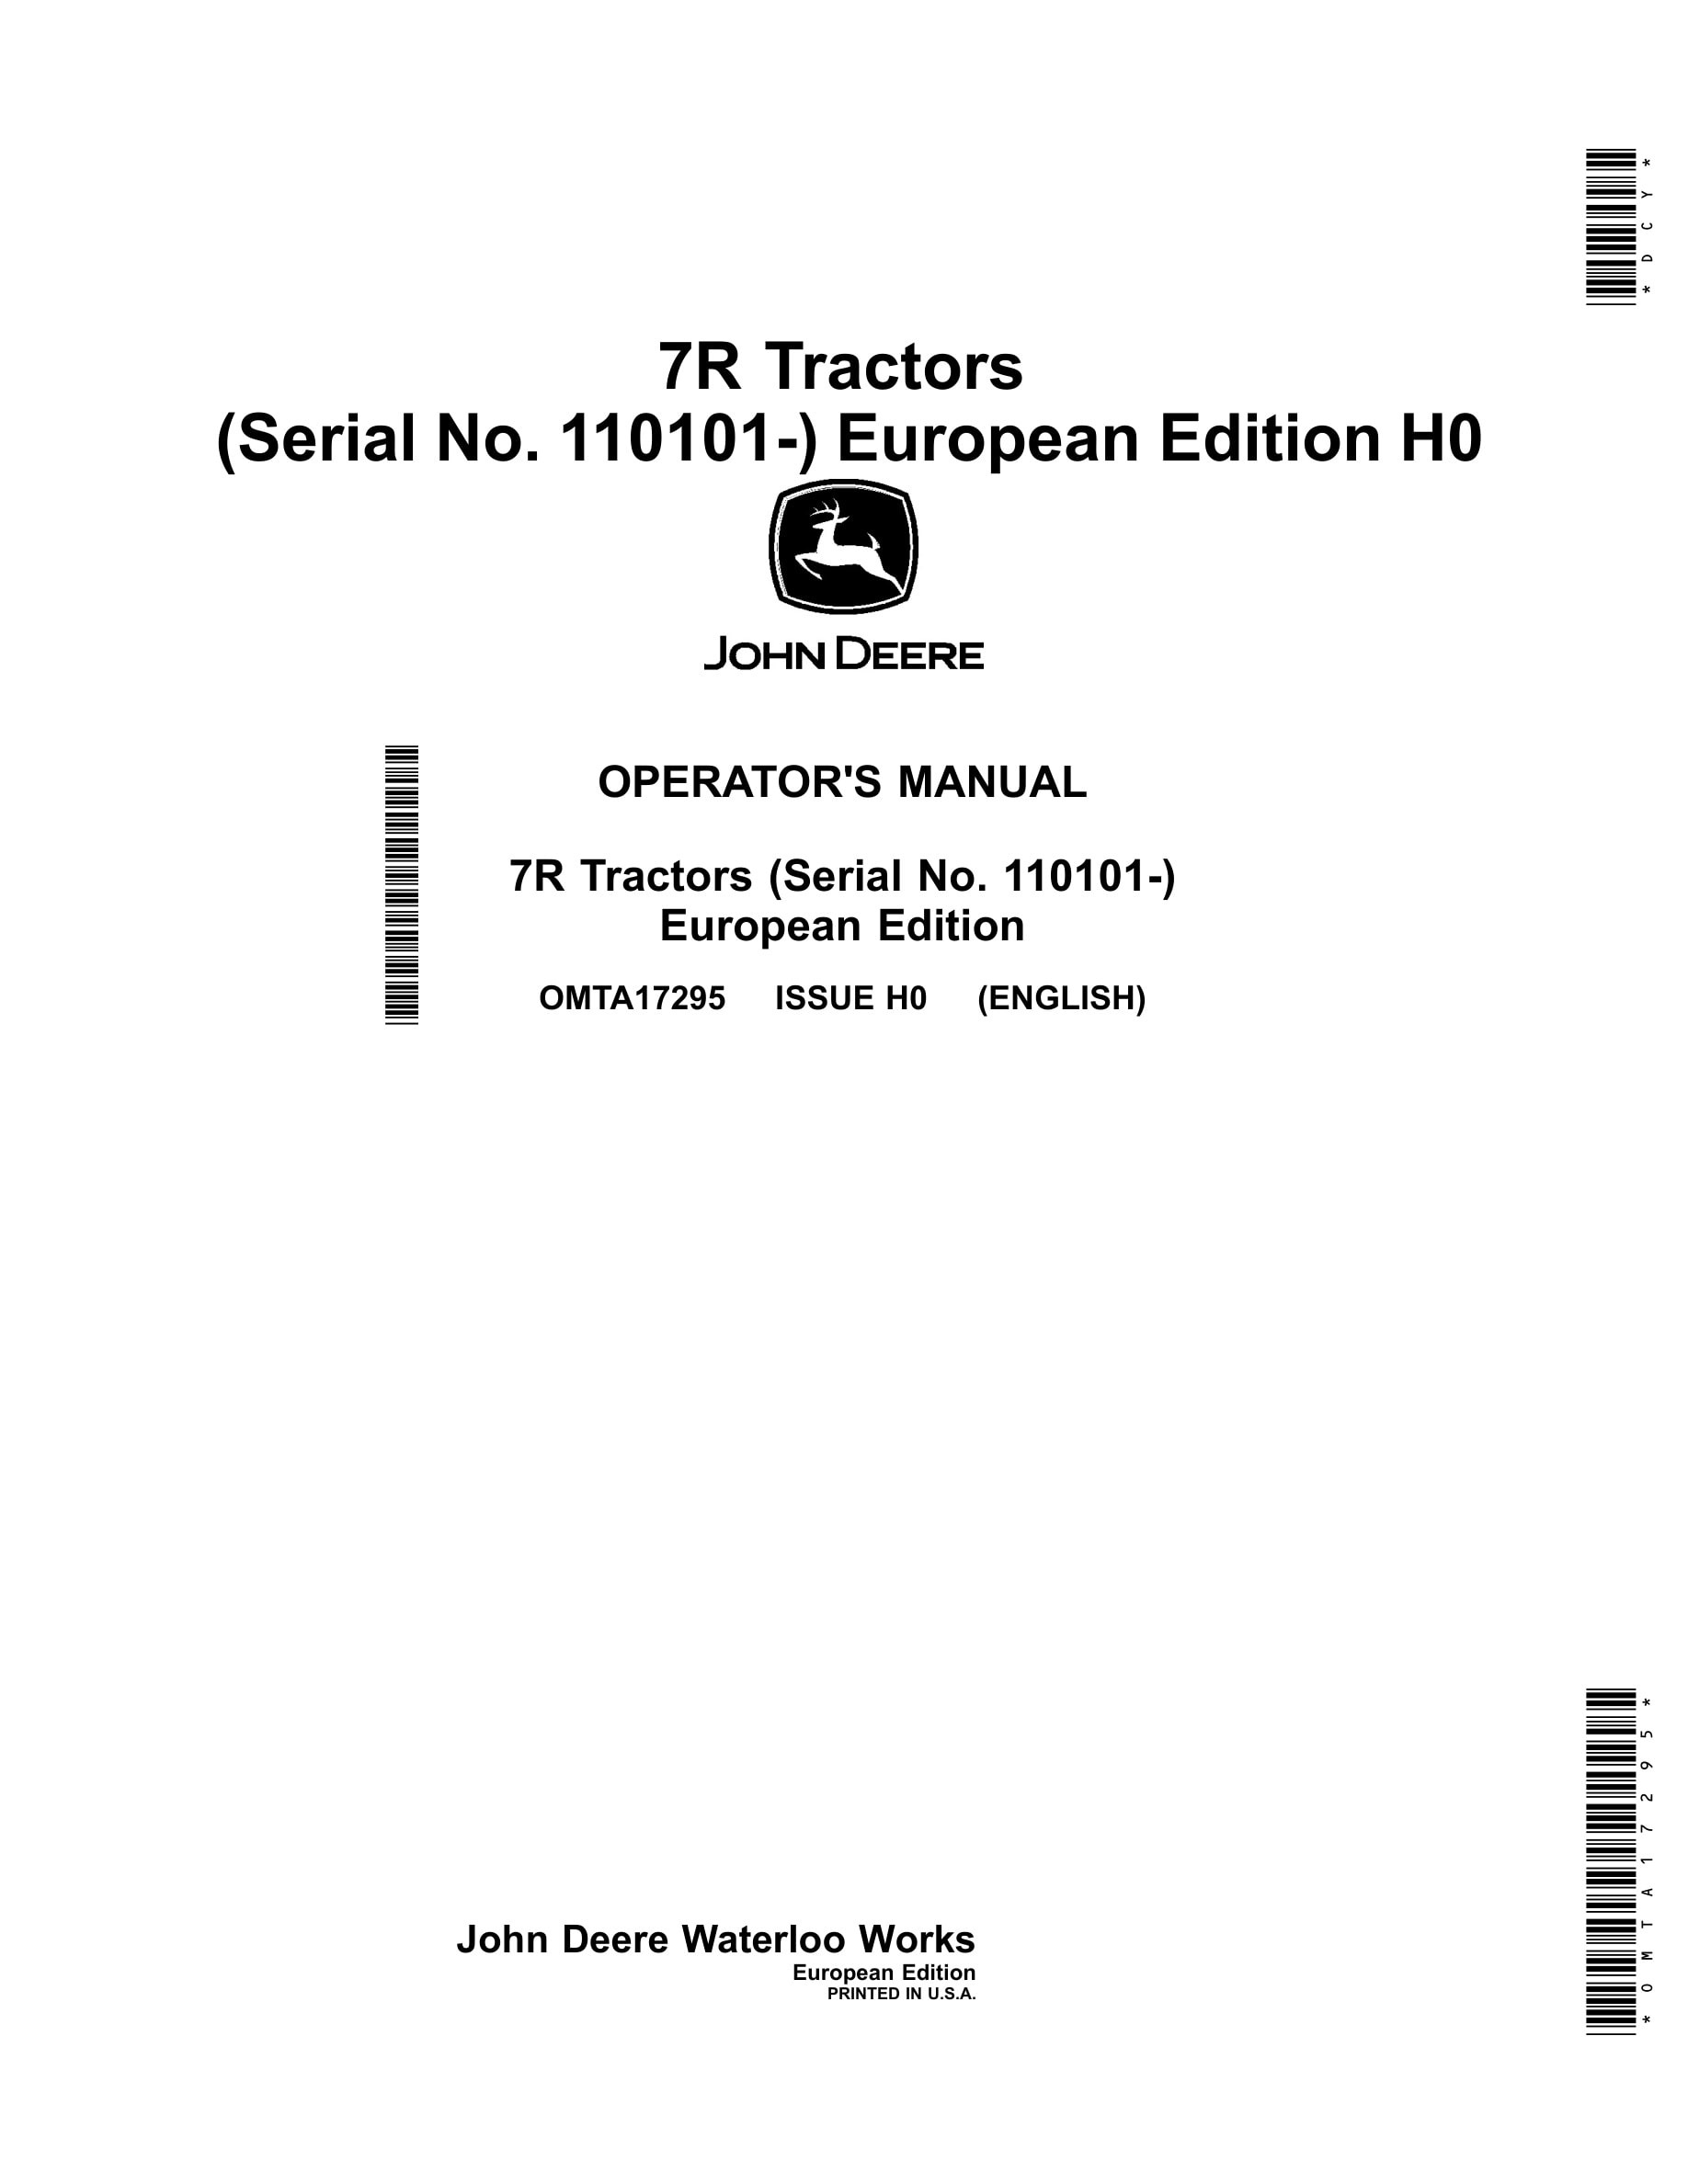 John Deere 7r Tractors Operator Manuals OMTA17295-1